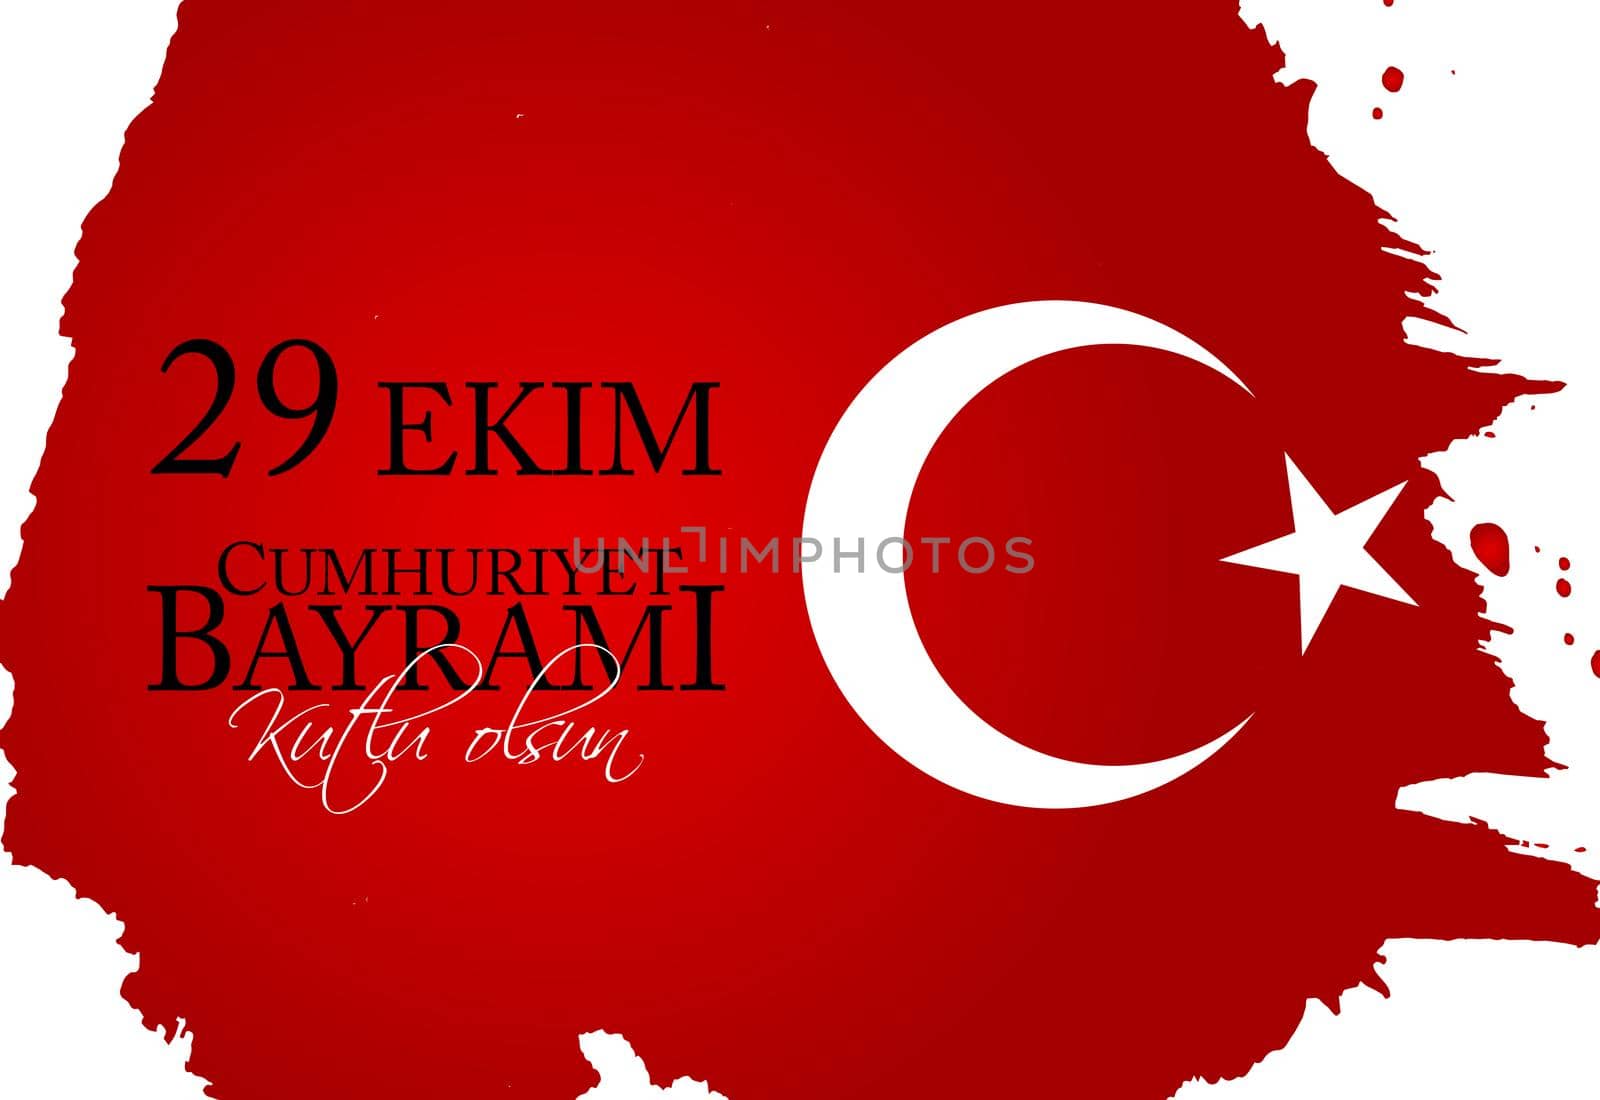 29 Ekim Cumhuriyet Bayrami kutlu olsun. Translation: 29 october Republic Day Turkey and the National Day in Turkey, Happy holiday by yganko